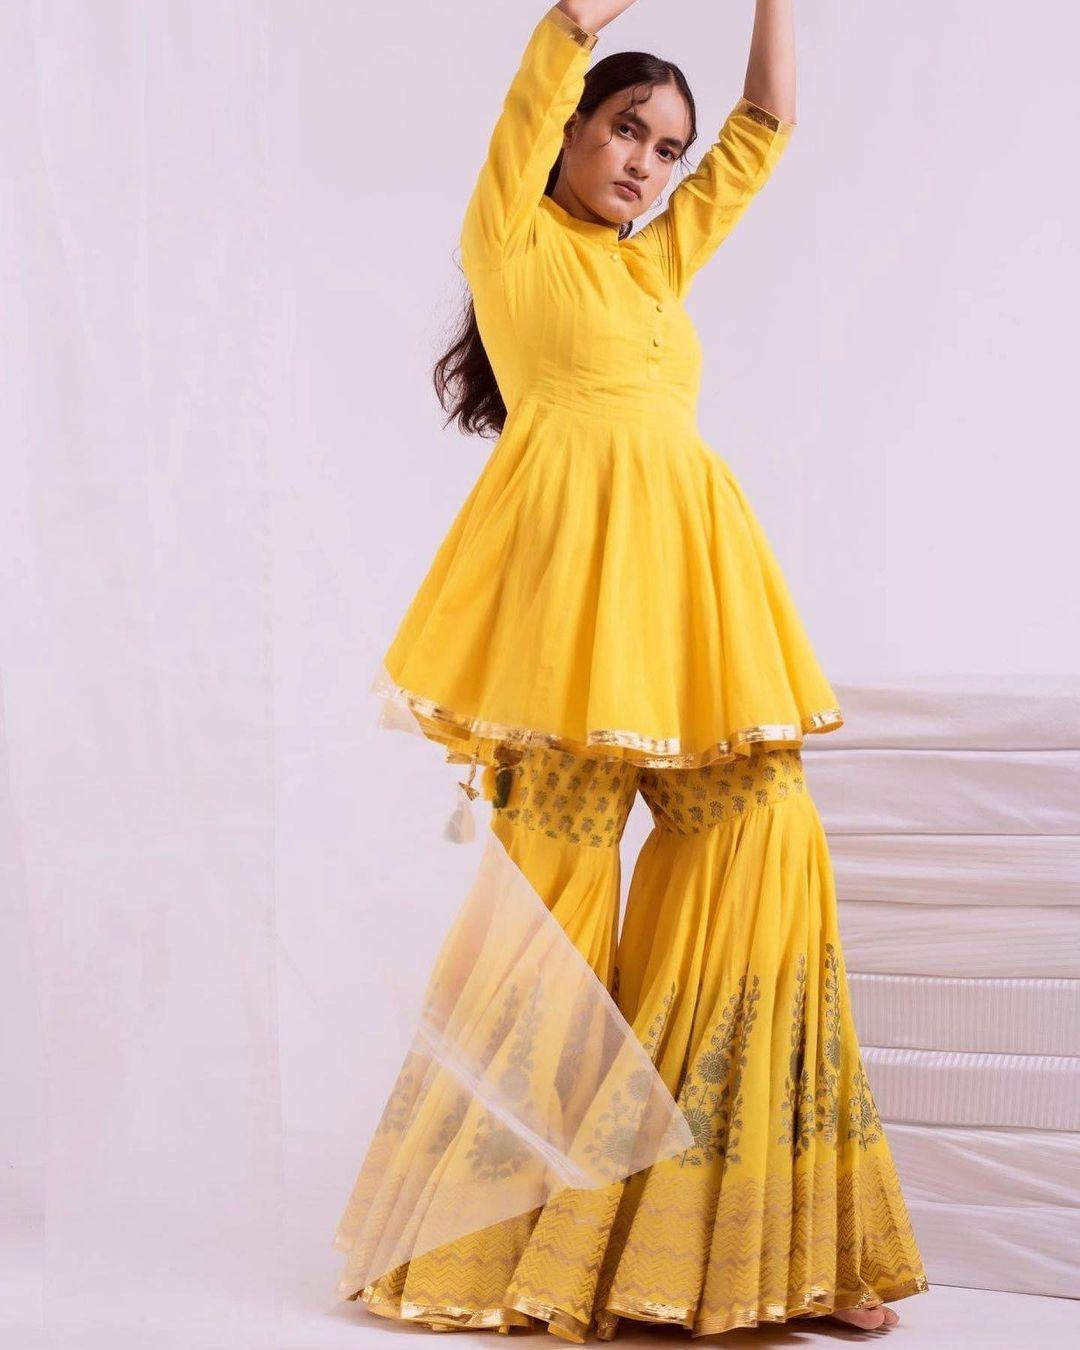 100+ Haldi Dresses for Brides, Latest Ideas for Haldi Outfits